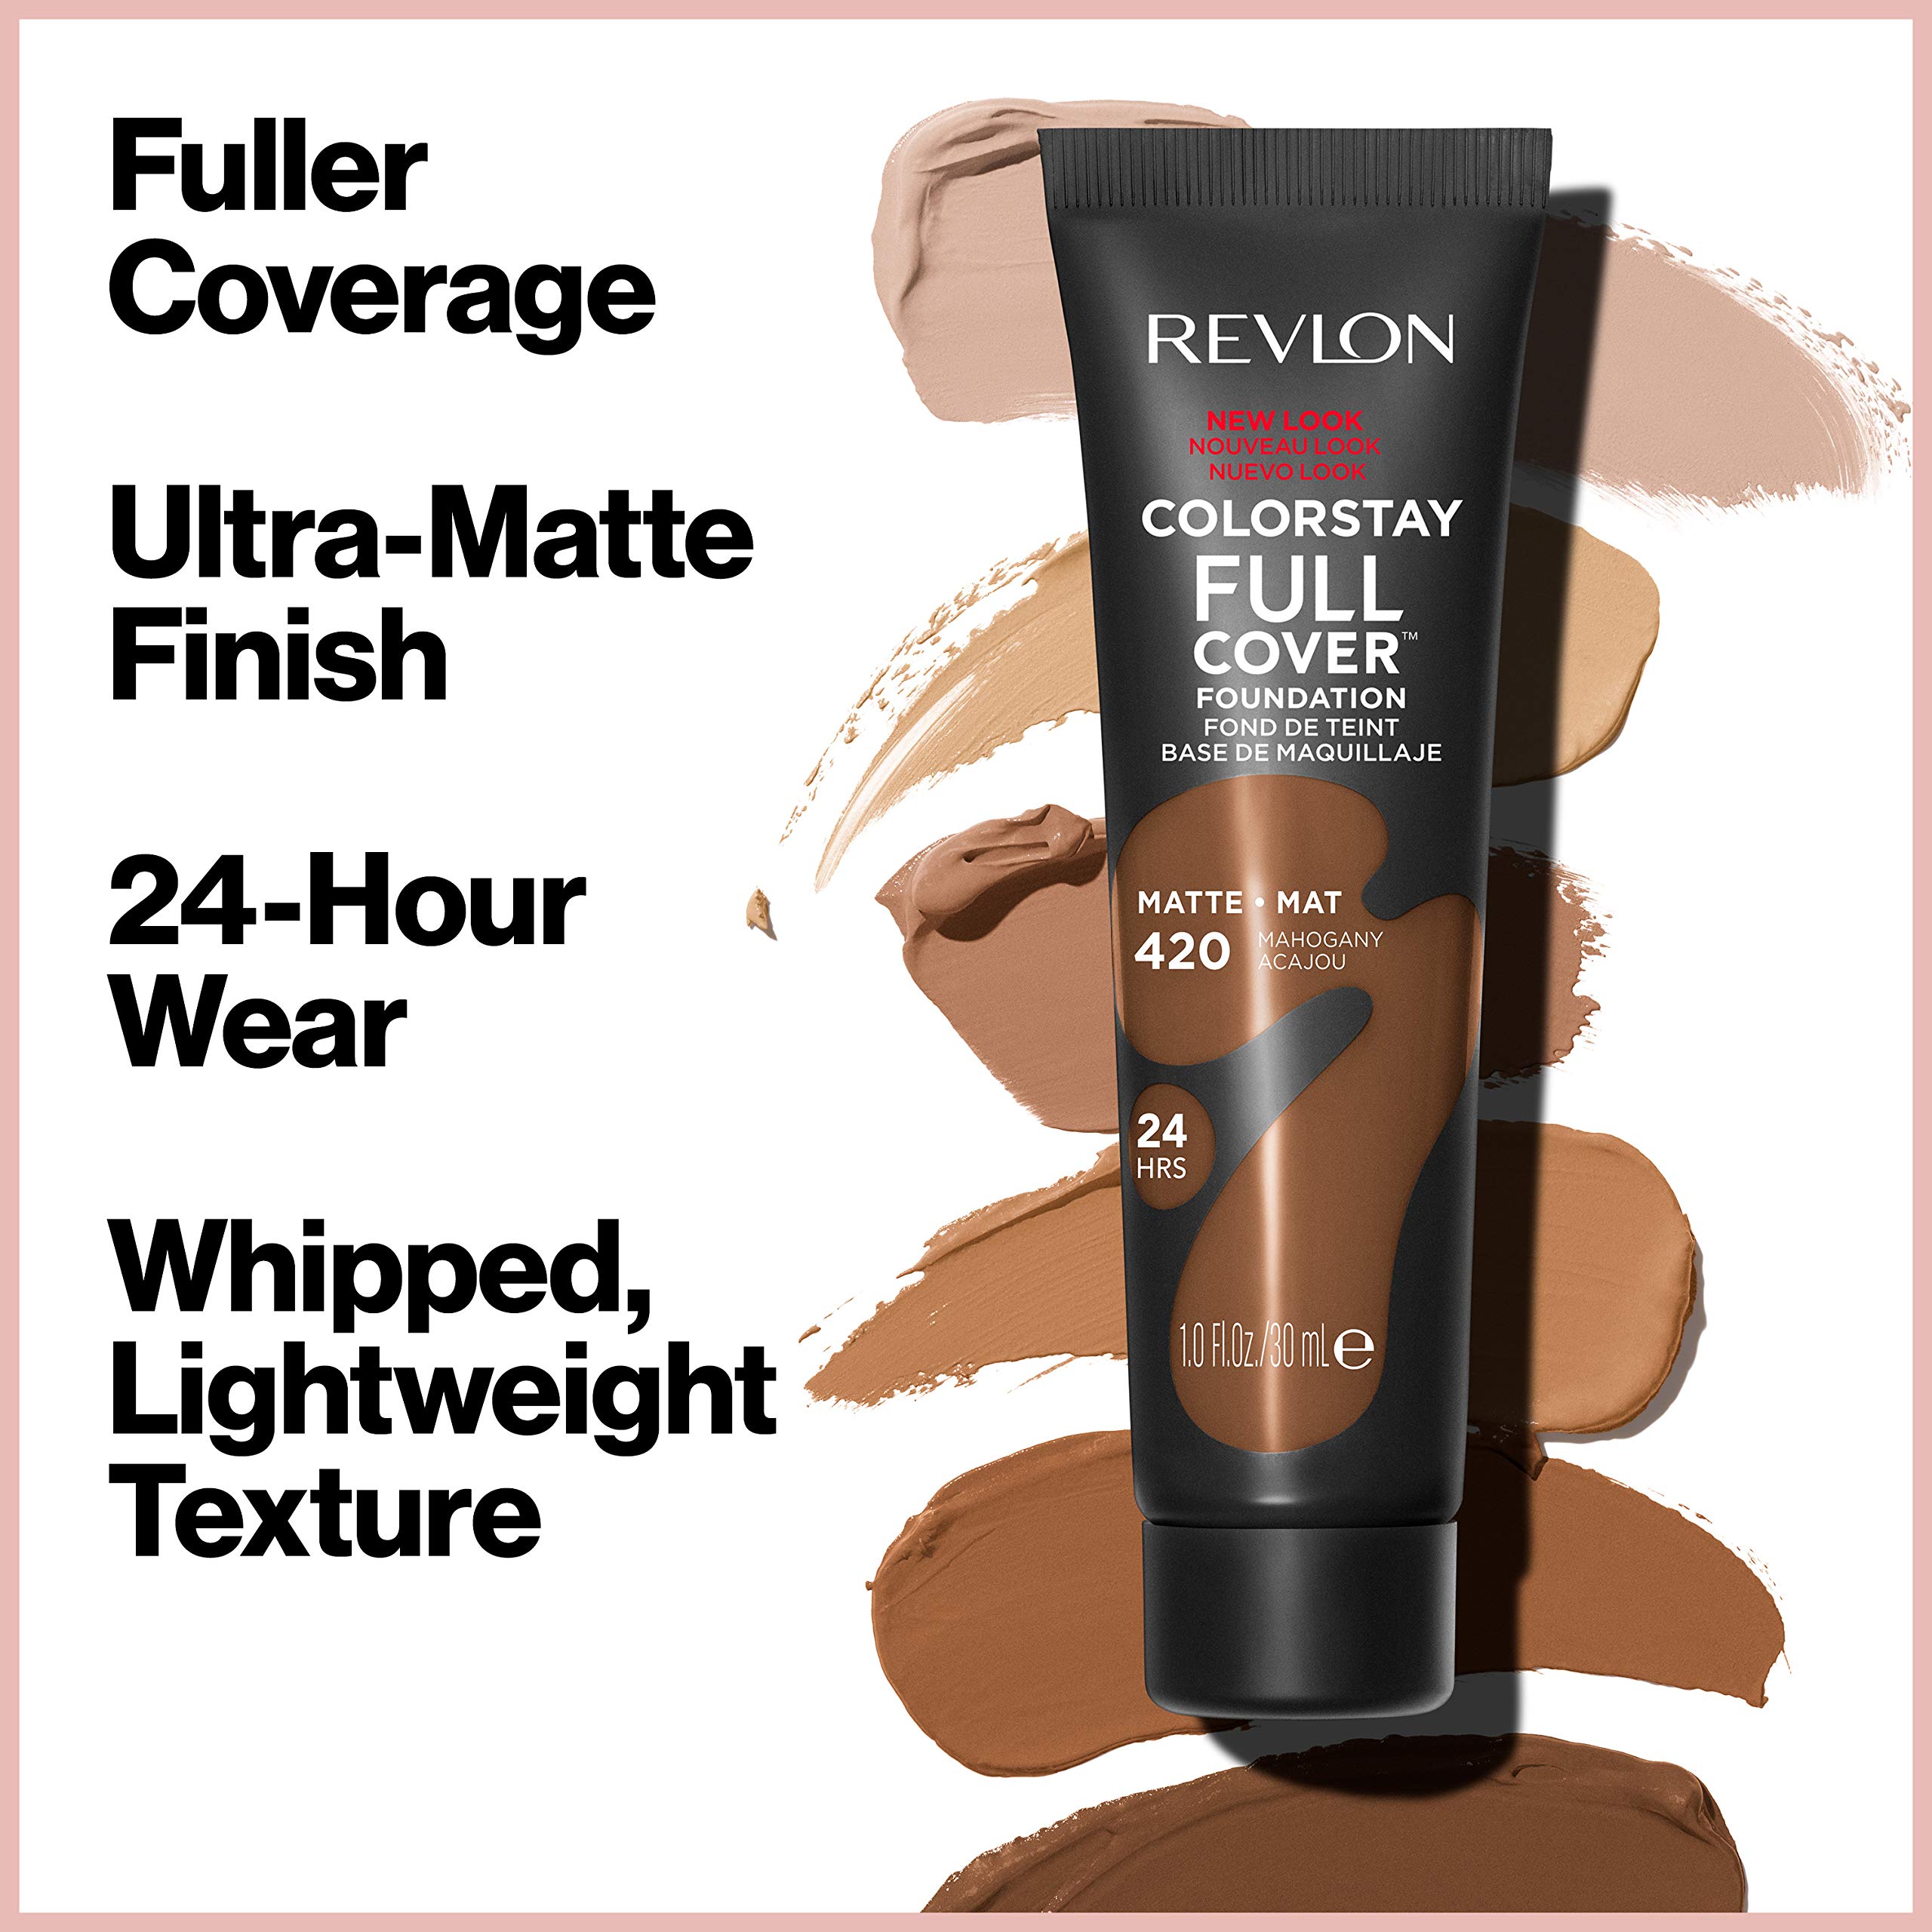 Revlon ColorStay Full Cover Longwear Matte Foundation, Heat & Sweat Resistant Lightweight Face Makeup, Almond (405), 1.0 oz